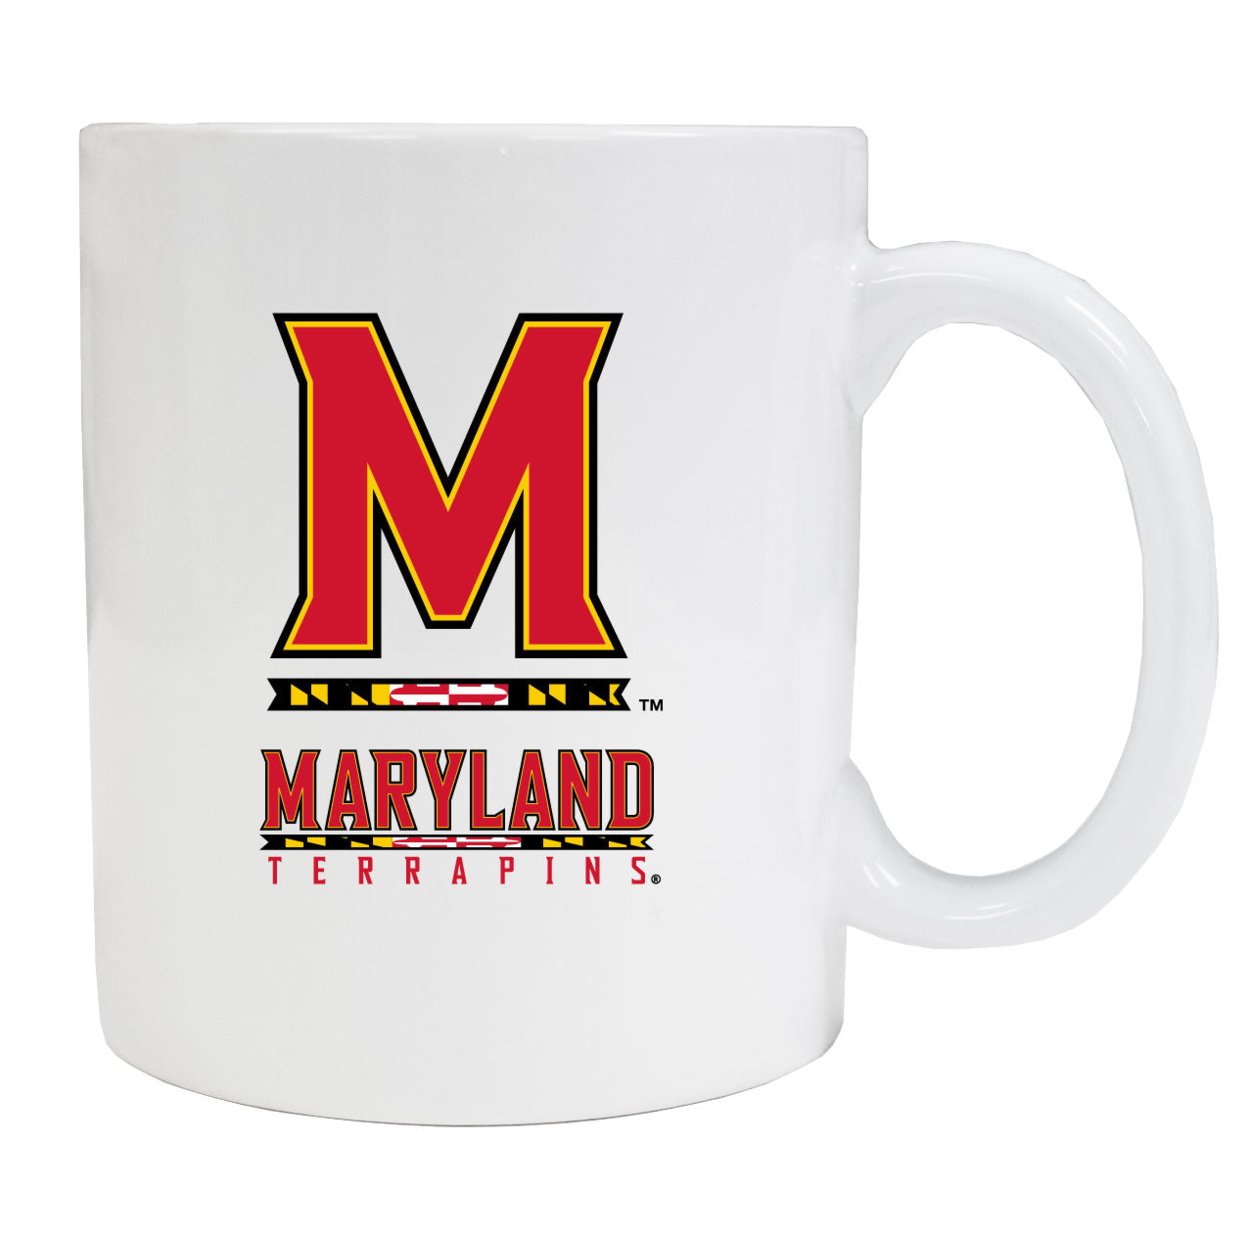 Maryland Terrapins White Ceramic Mug (White).